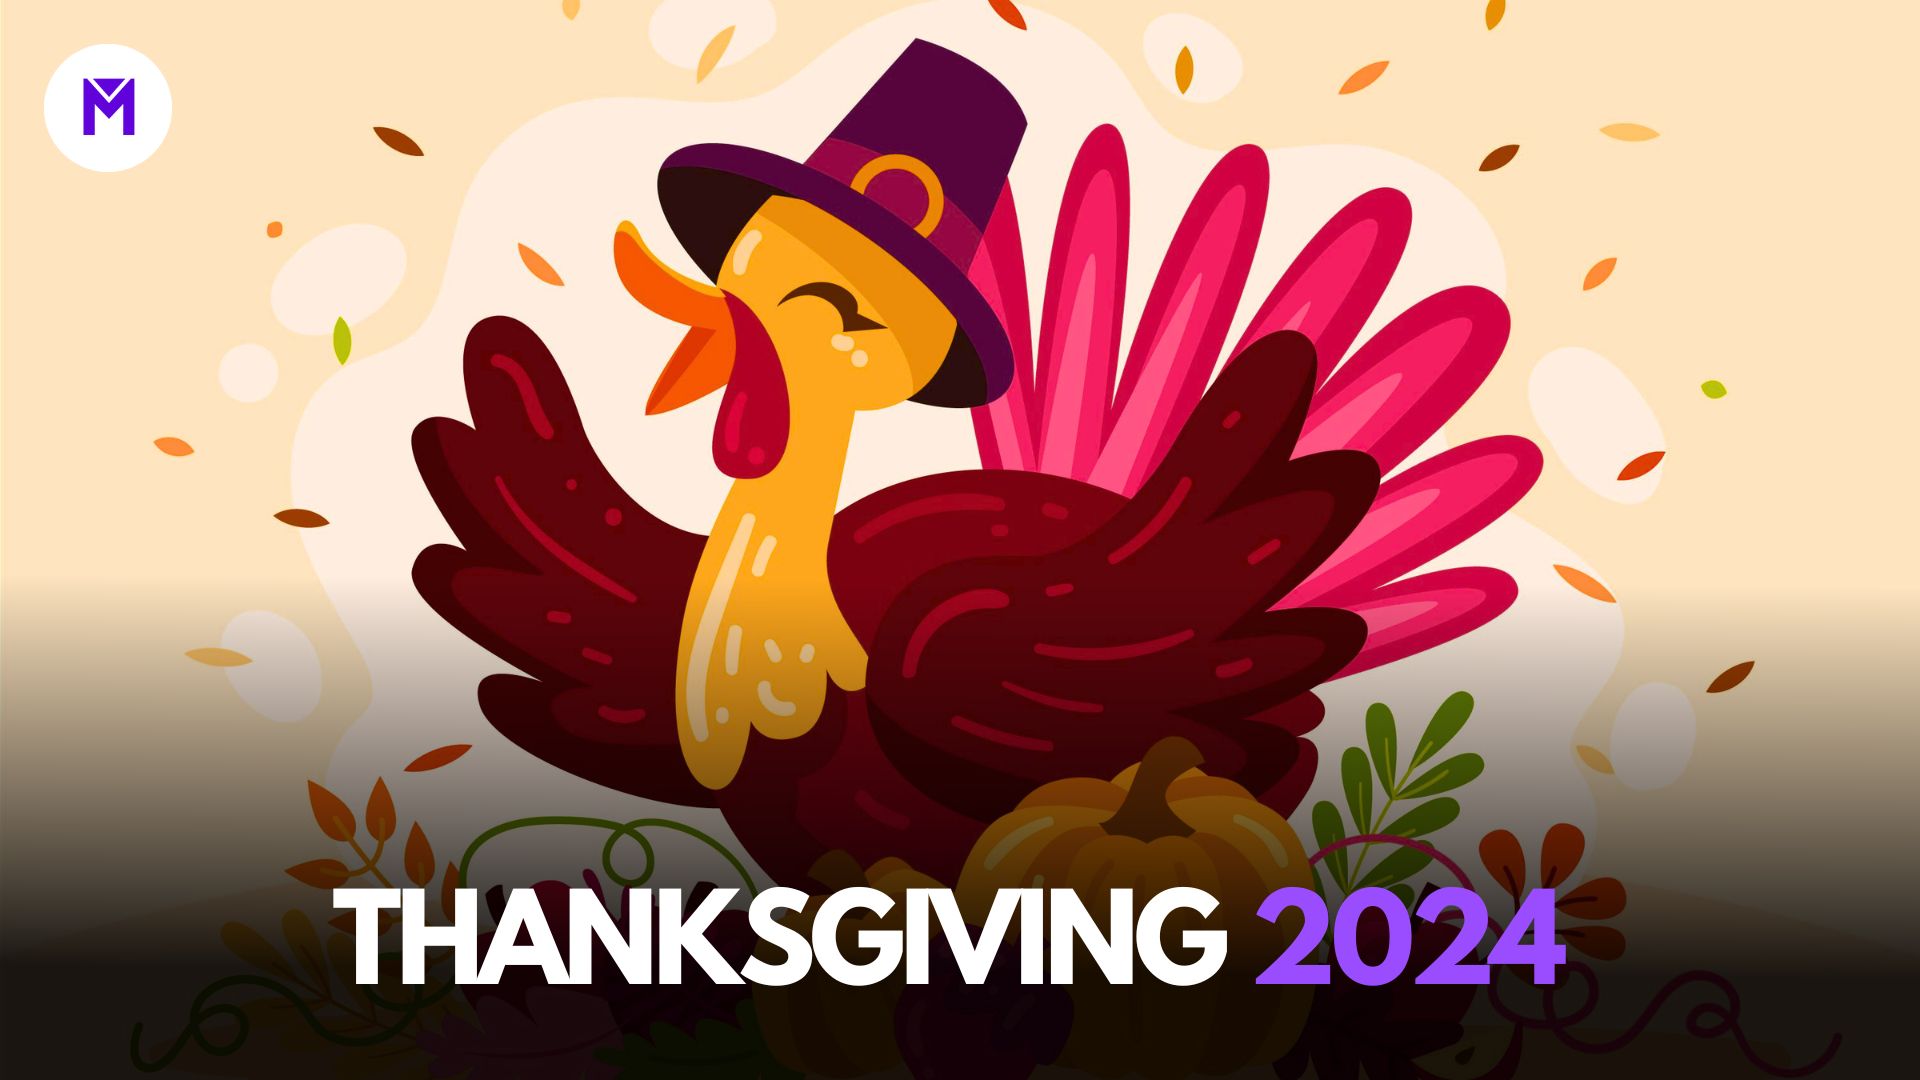 Thanksgiving 2024 Trending Décor, Events, Recipes & More